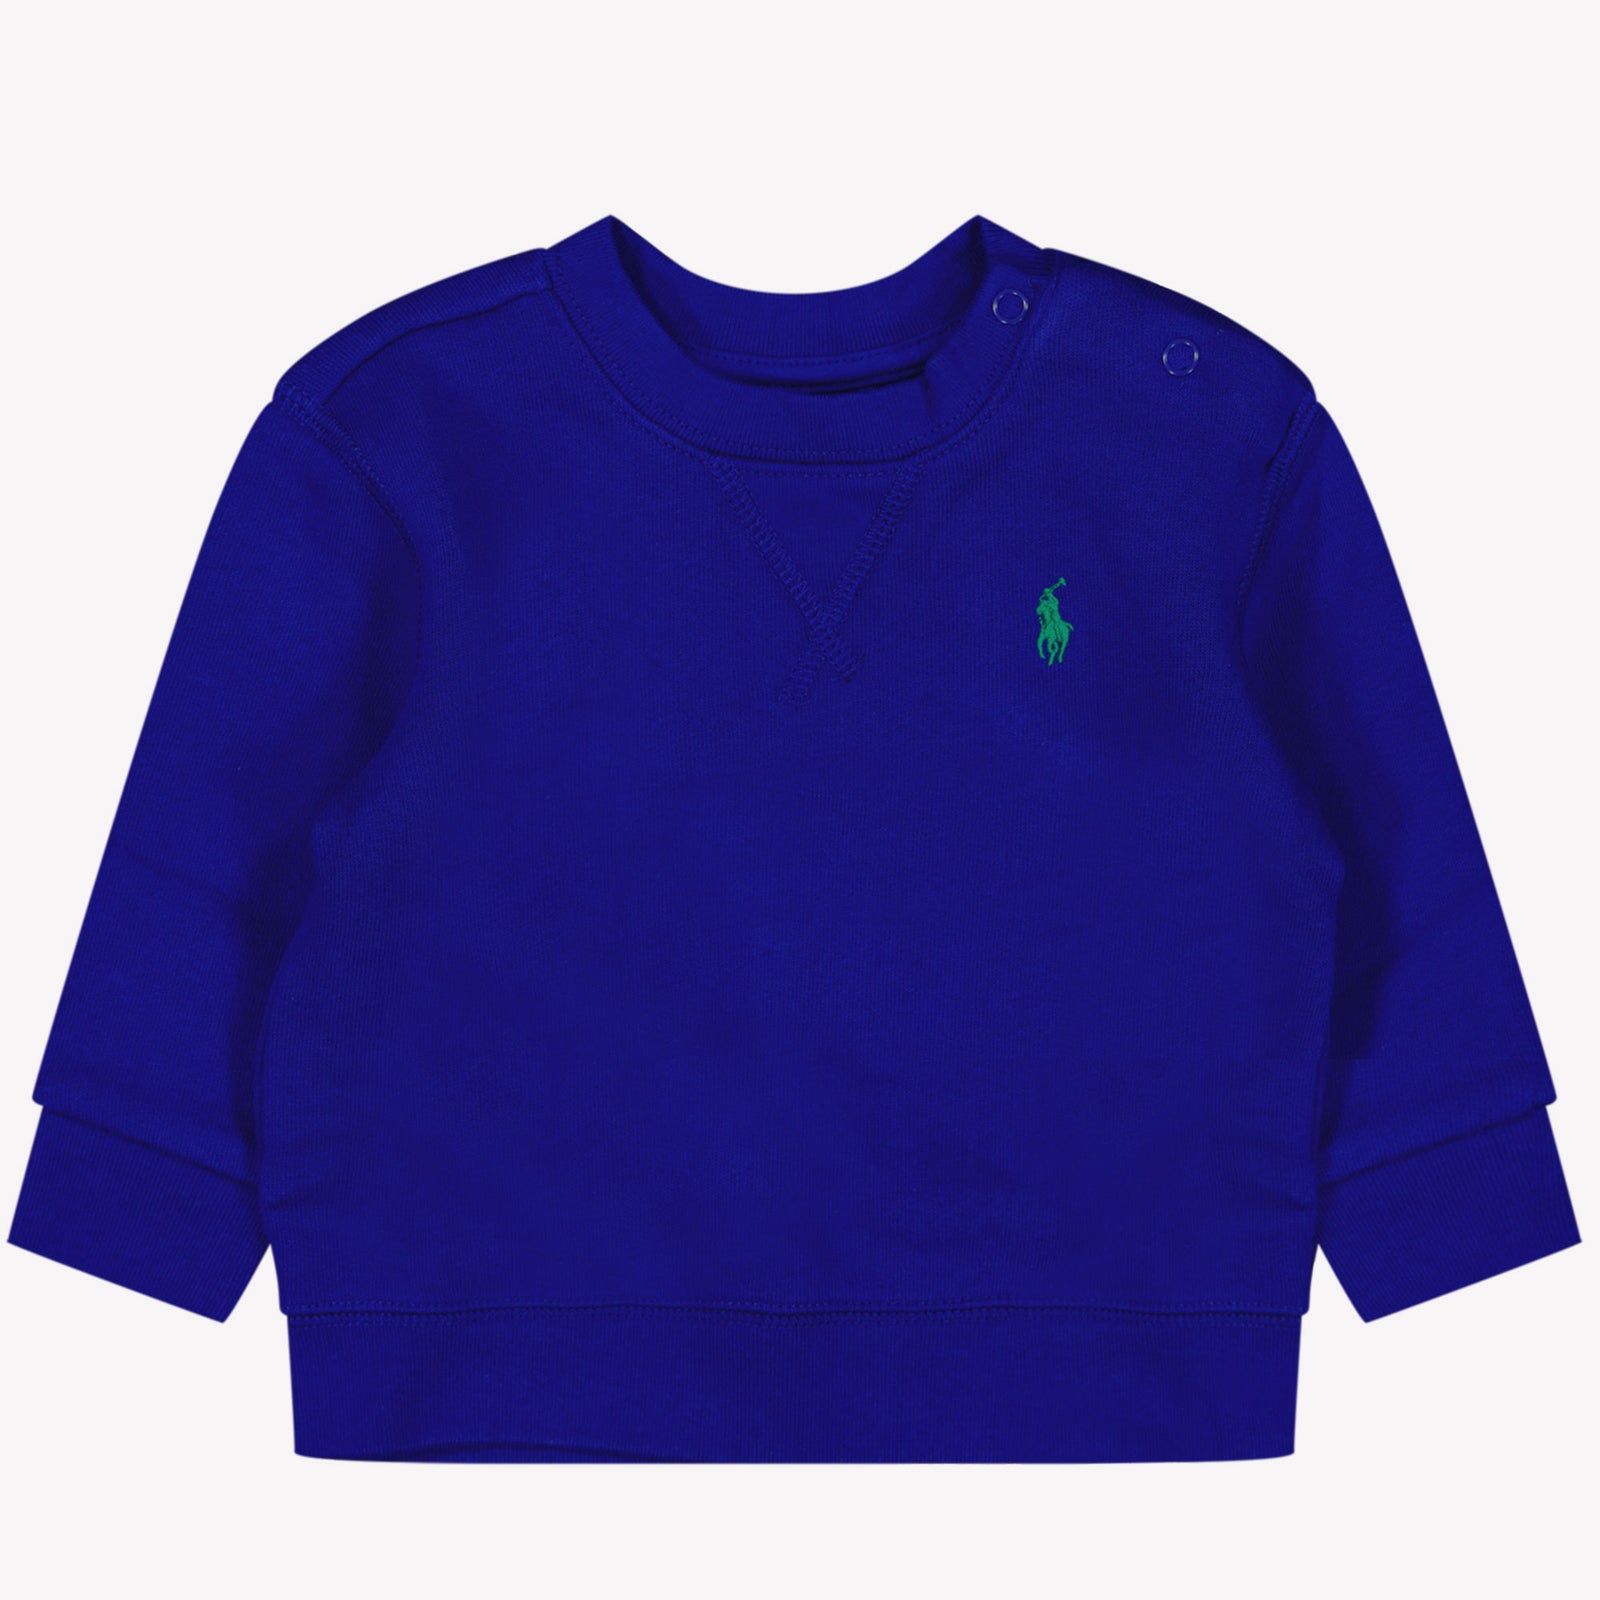 Ralph Lauren Baby drenge sweater cobalt blå